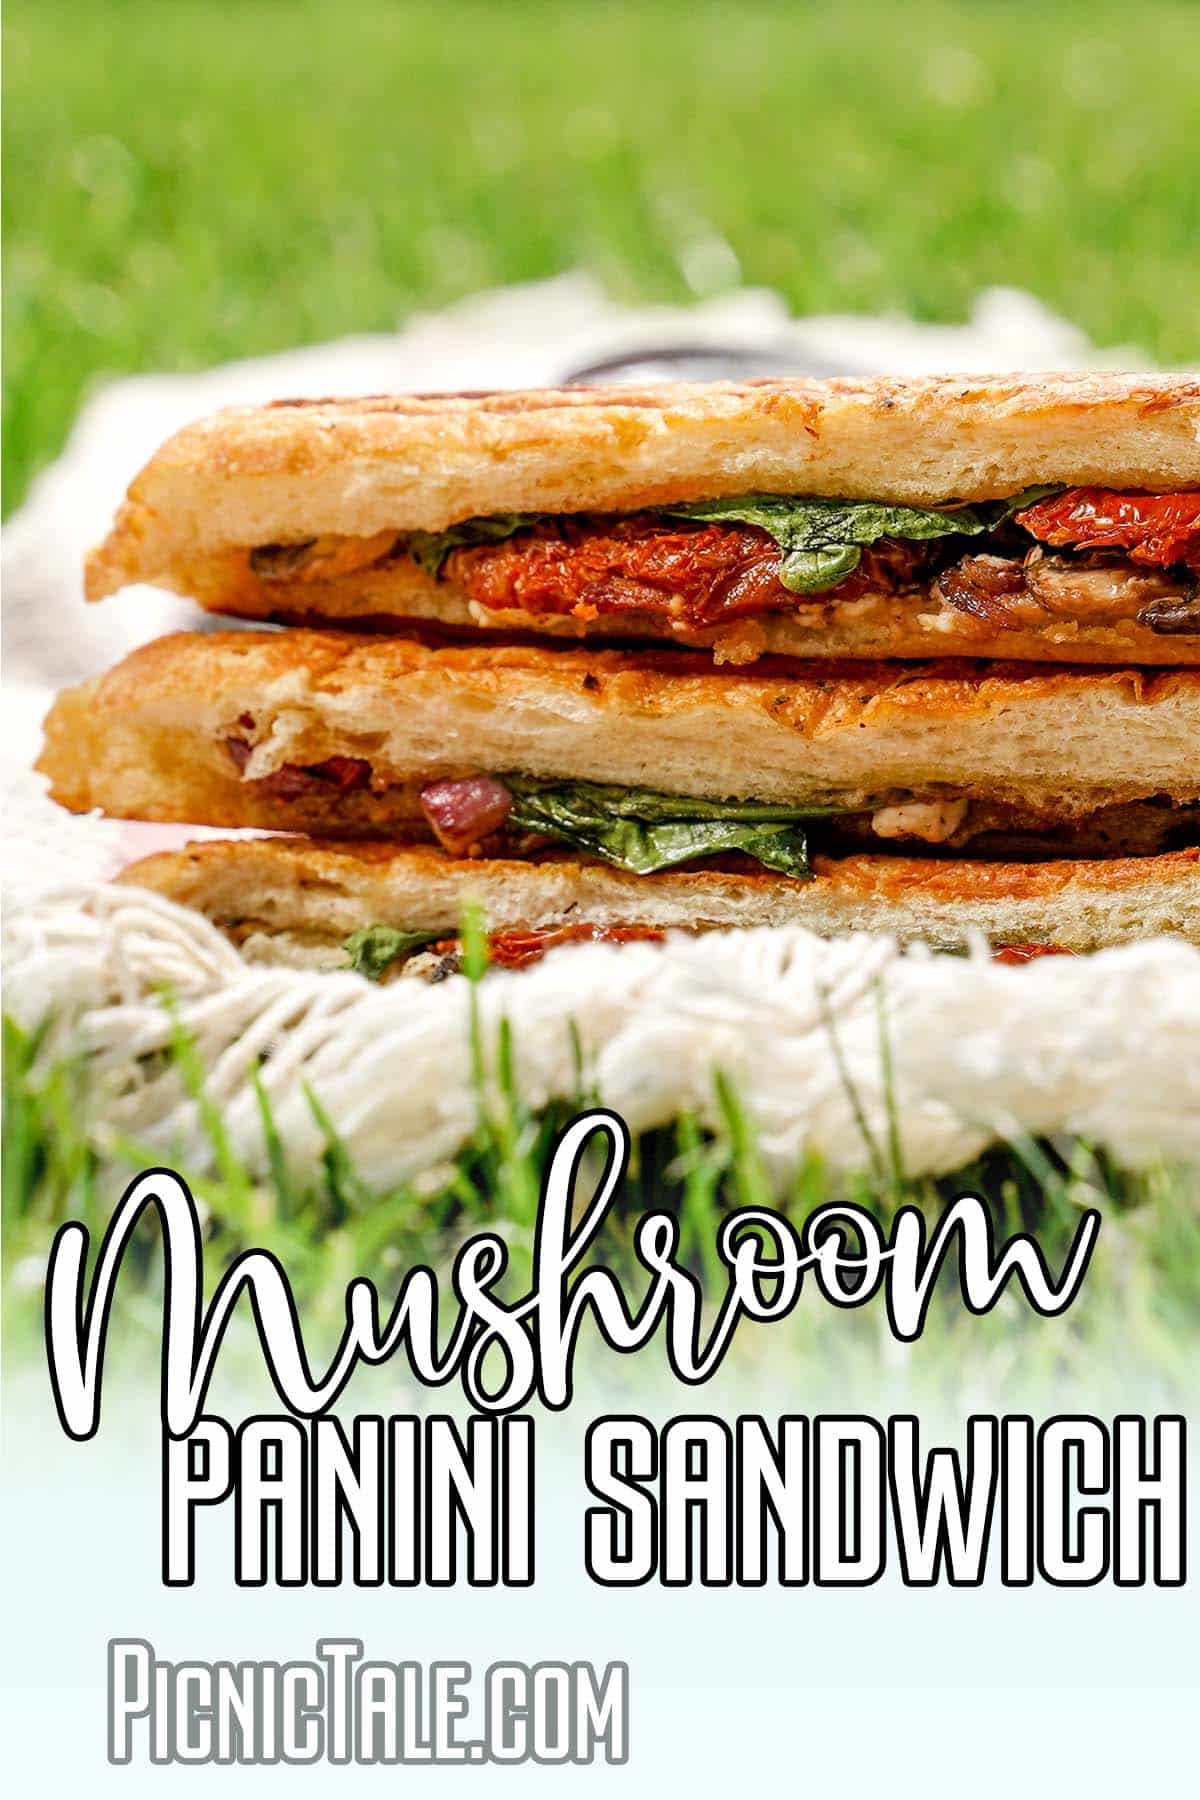 Mushroom Panini sandwich, grass and fringed towel with writing on bottom.